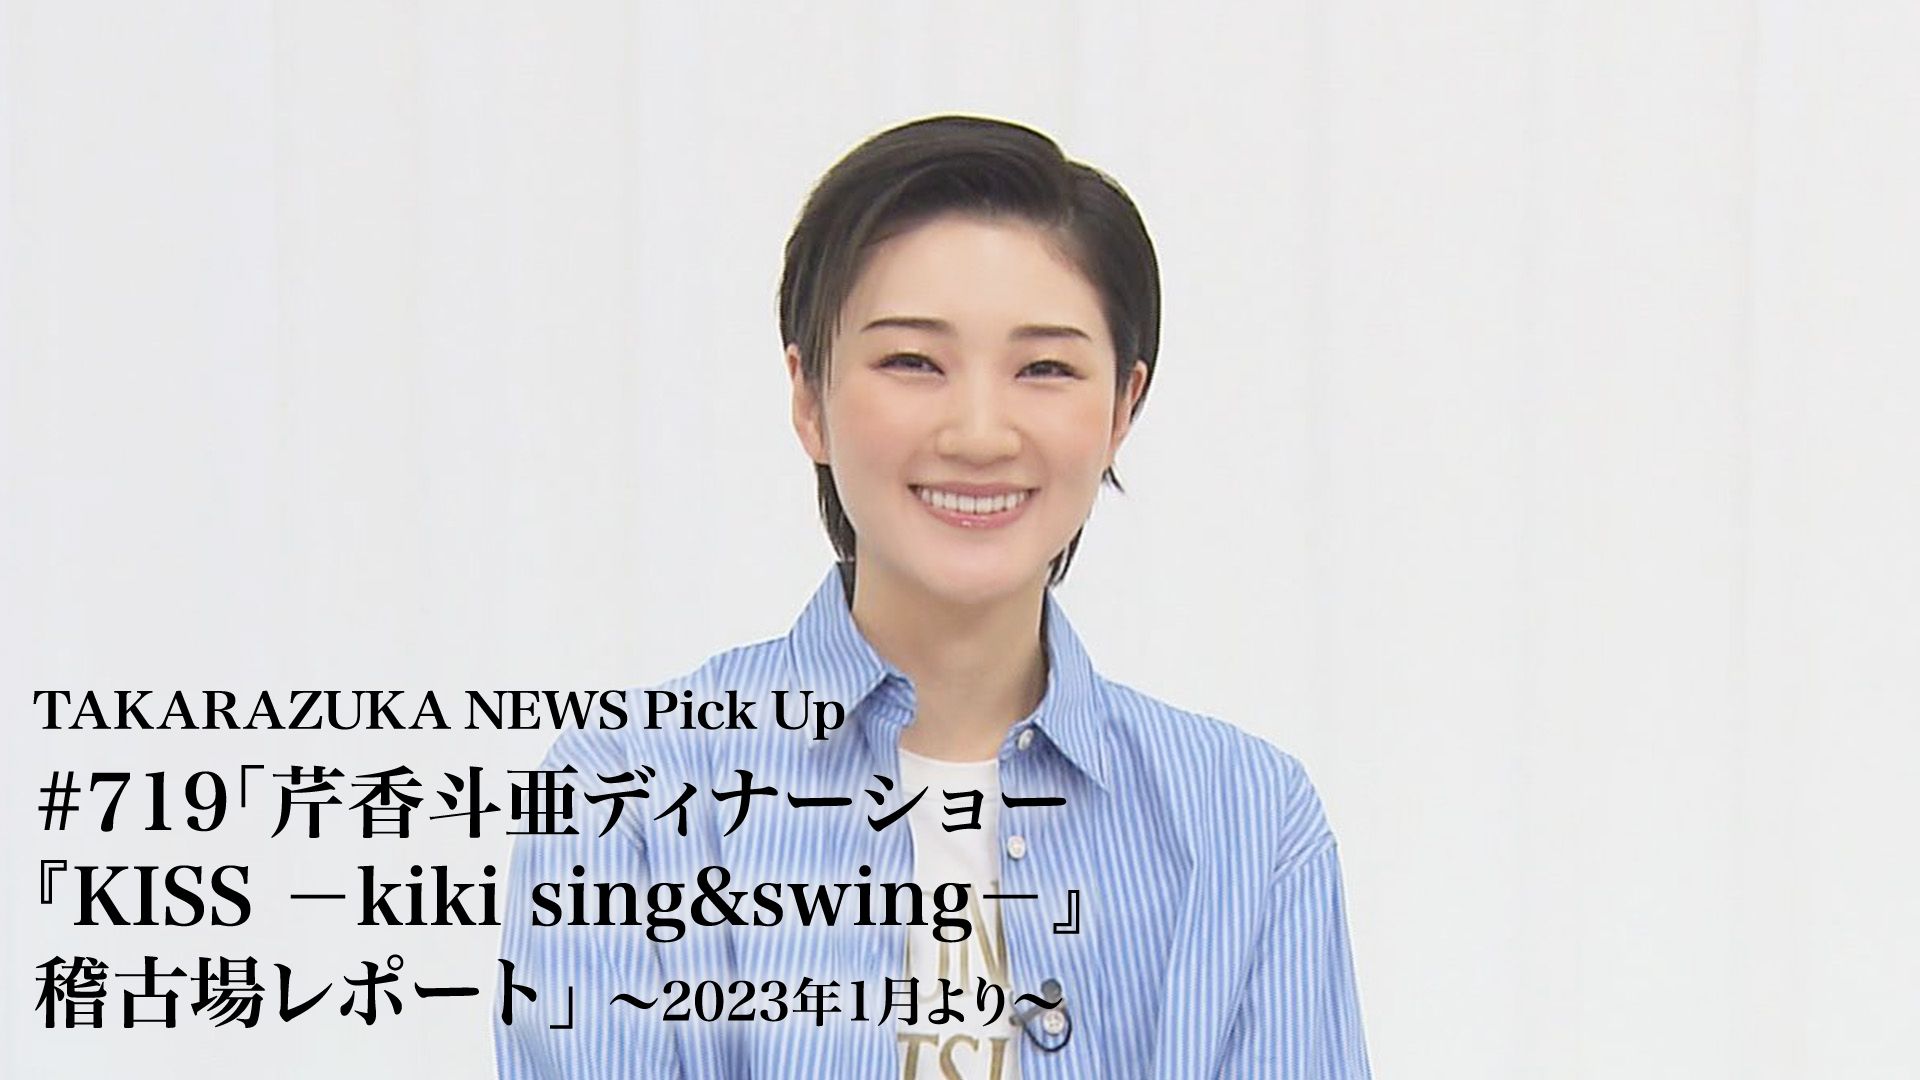 TAKARAZUKA NEWS Pick Up #719「芹香斗亜ディナーショー『KISS -kiki sing&swing-』稽古場レポート」〜2023年1月より〜